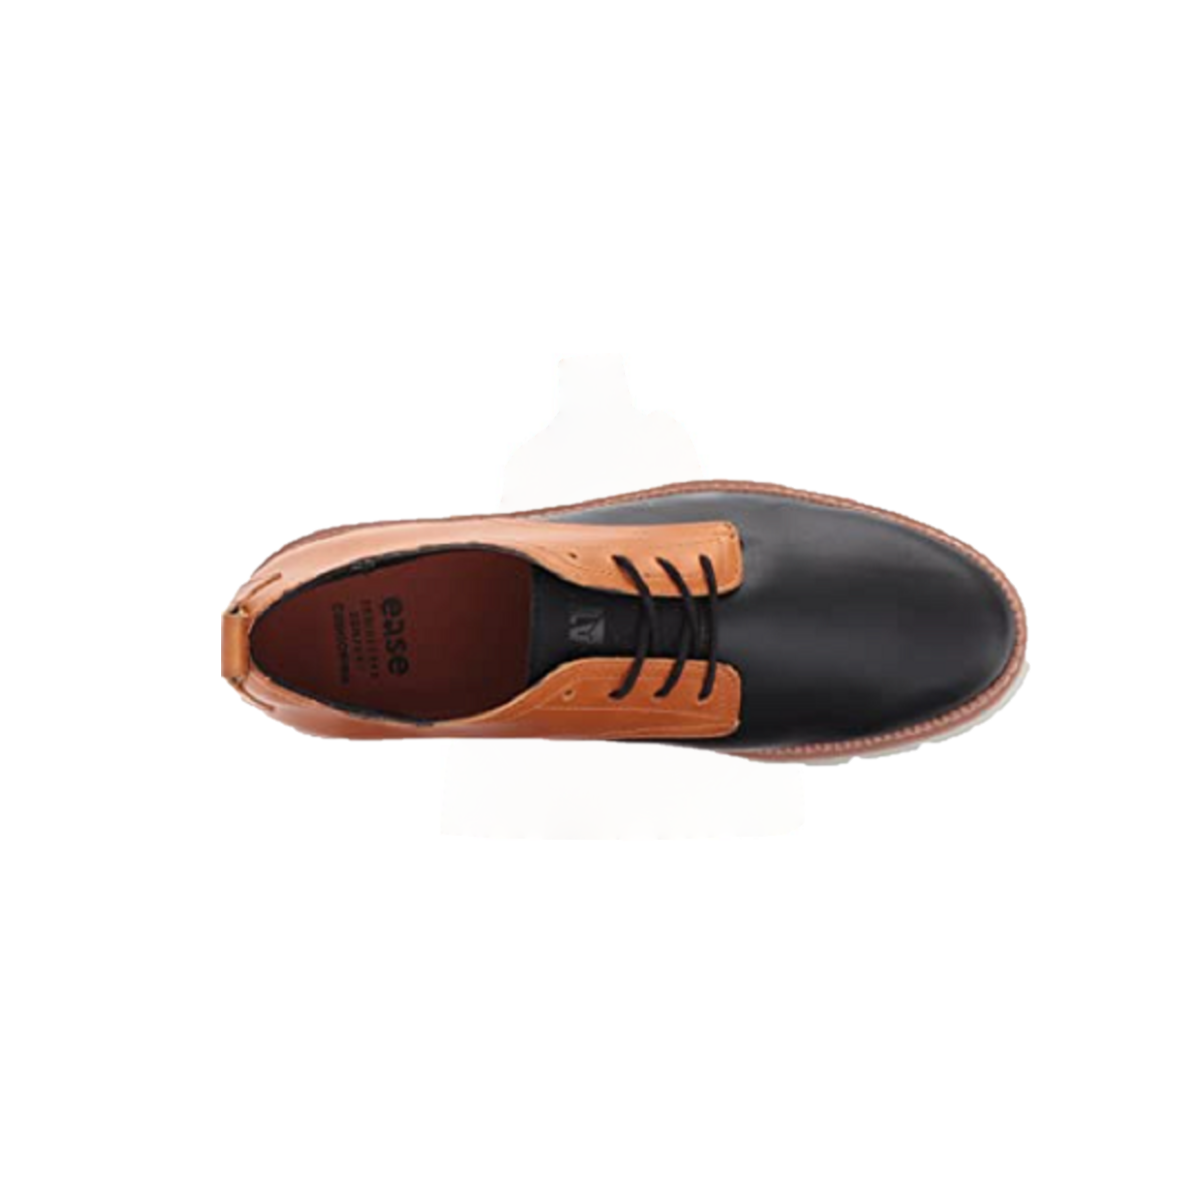 CATERPILLAR P309893 WINDUP WMN'S (Medium) Black/Tan Leather Casual Shoes